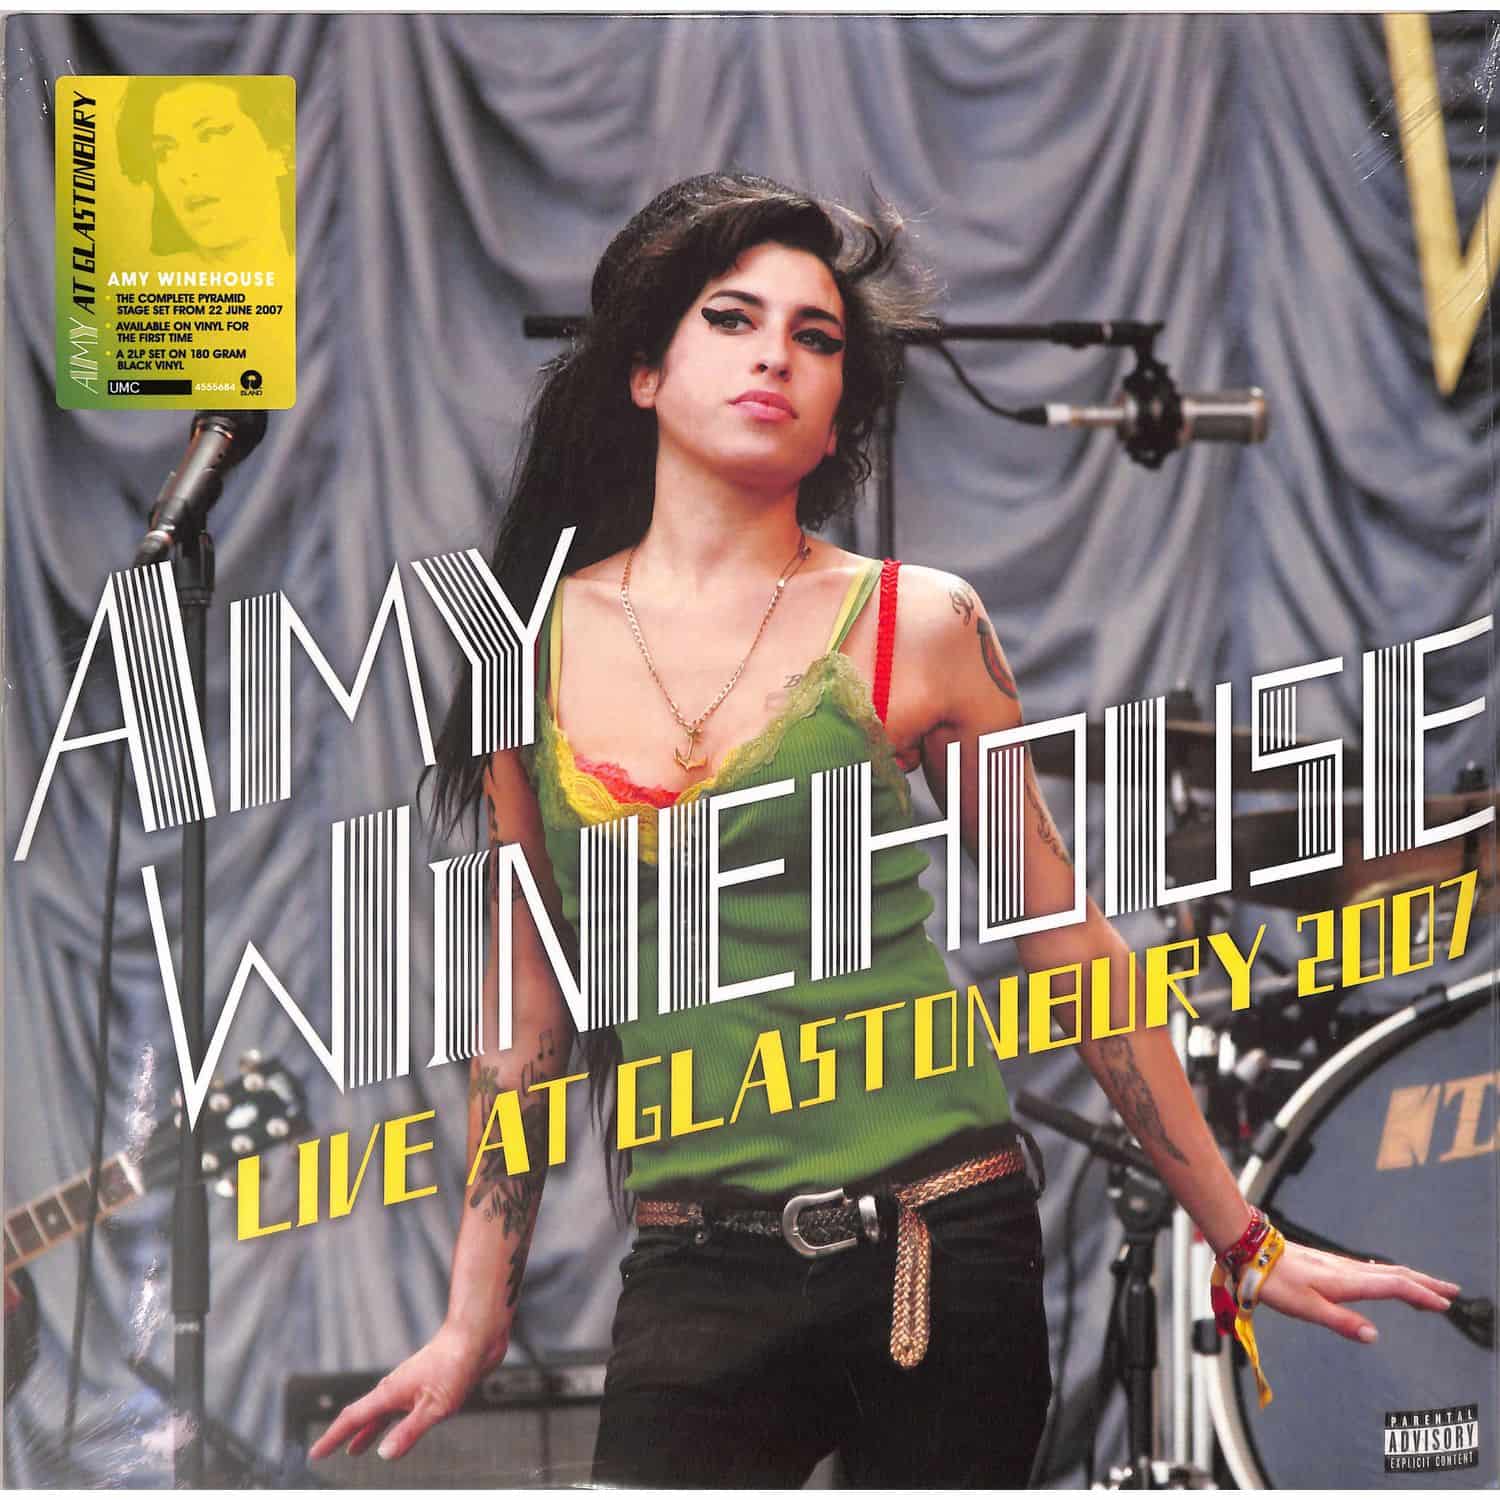 Amy Winehouse - LIVE AT GLASTONBURY 